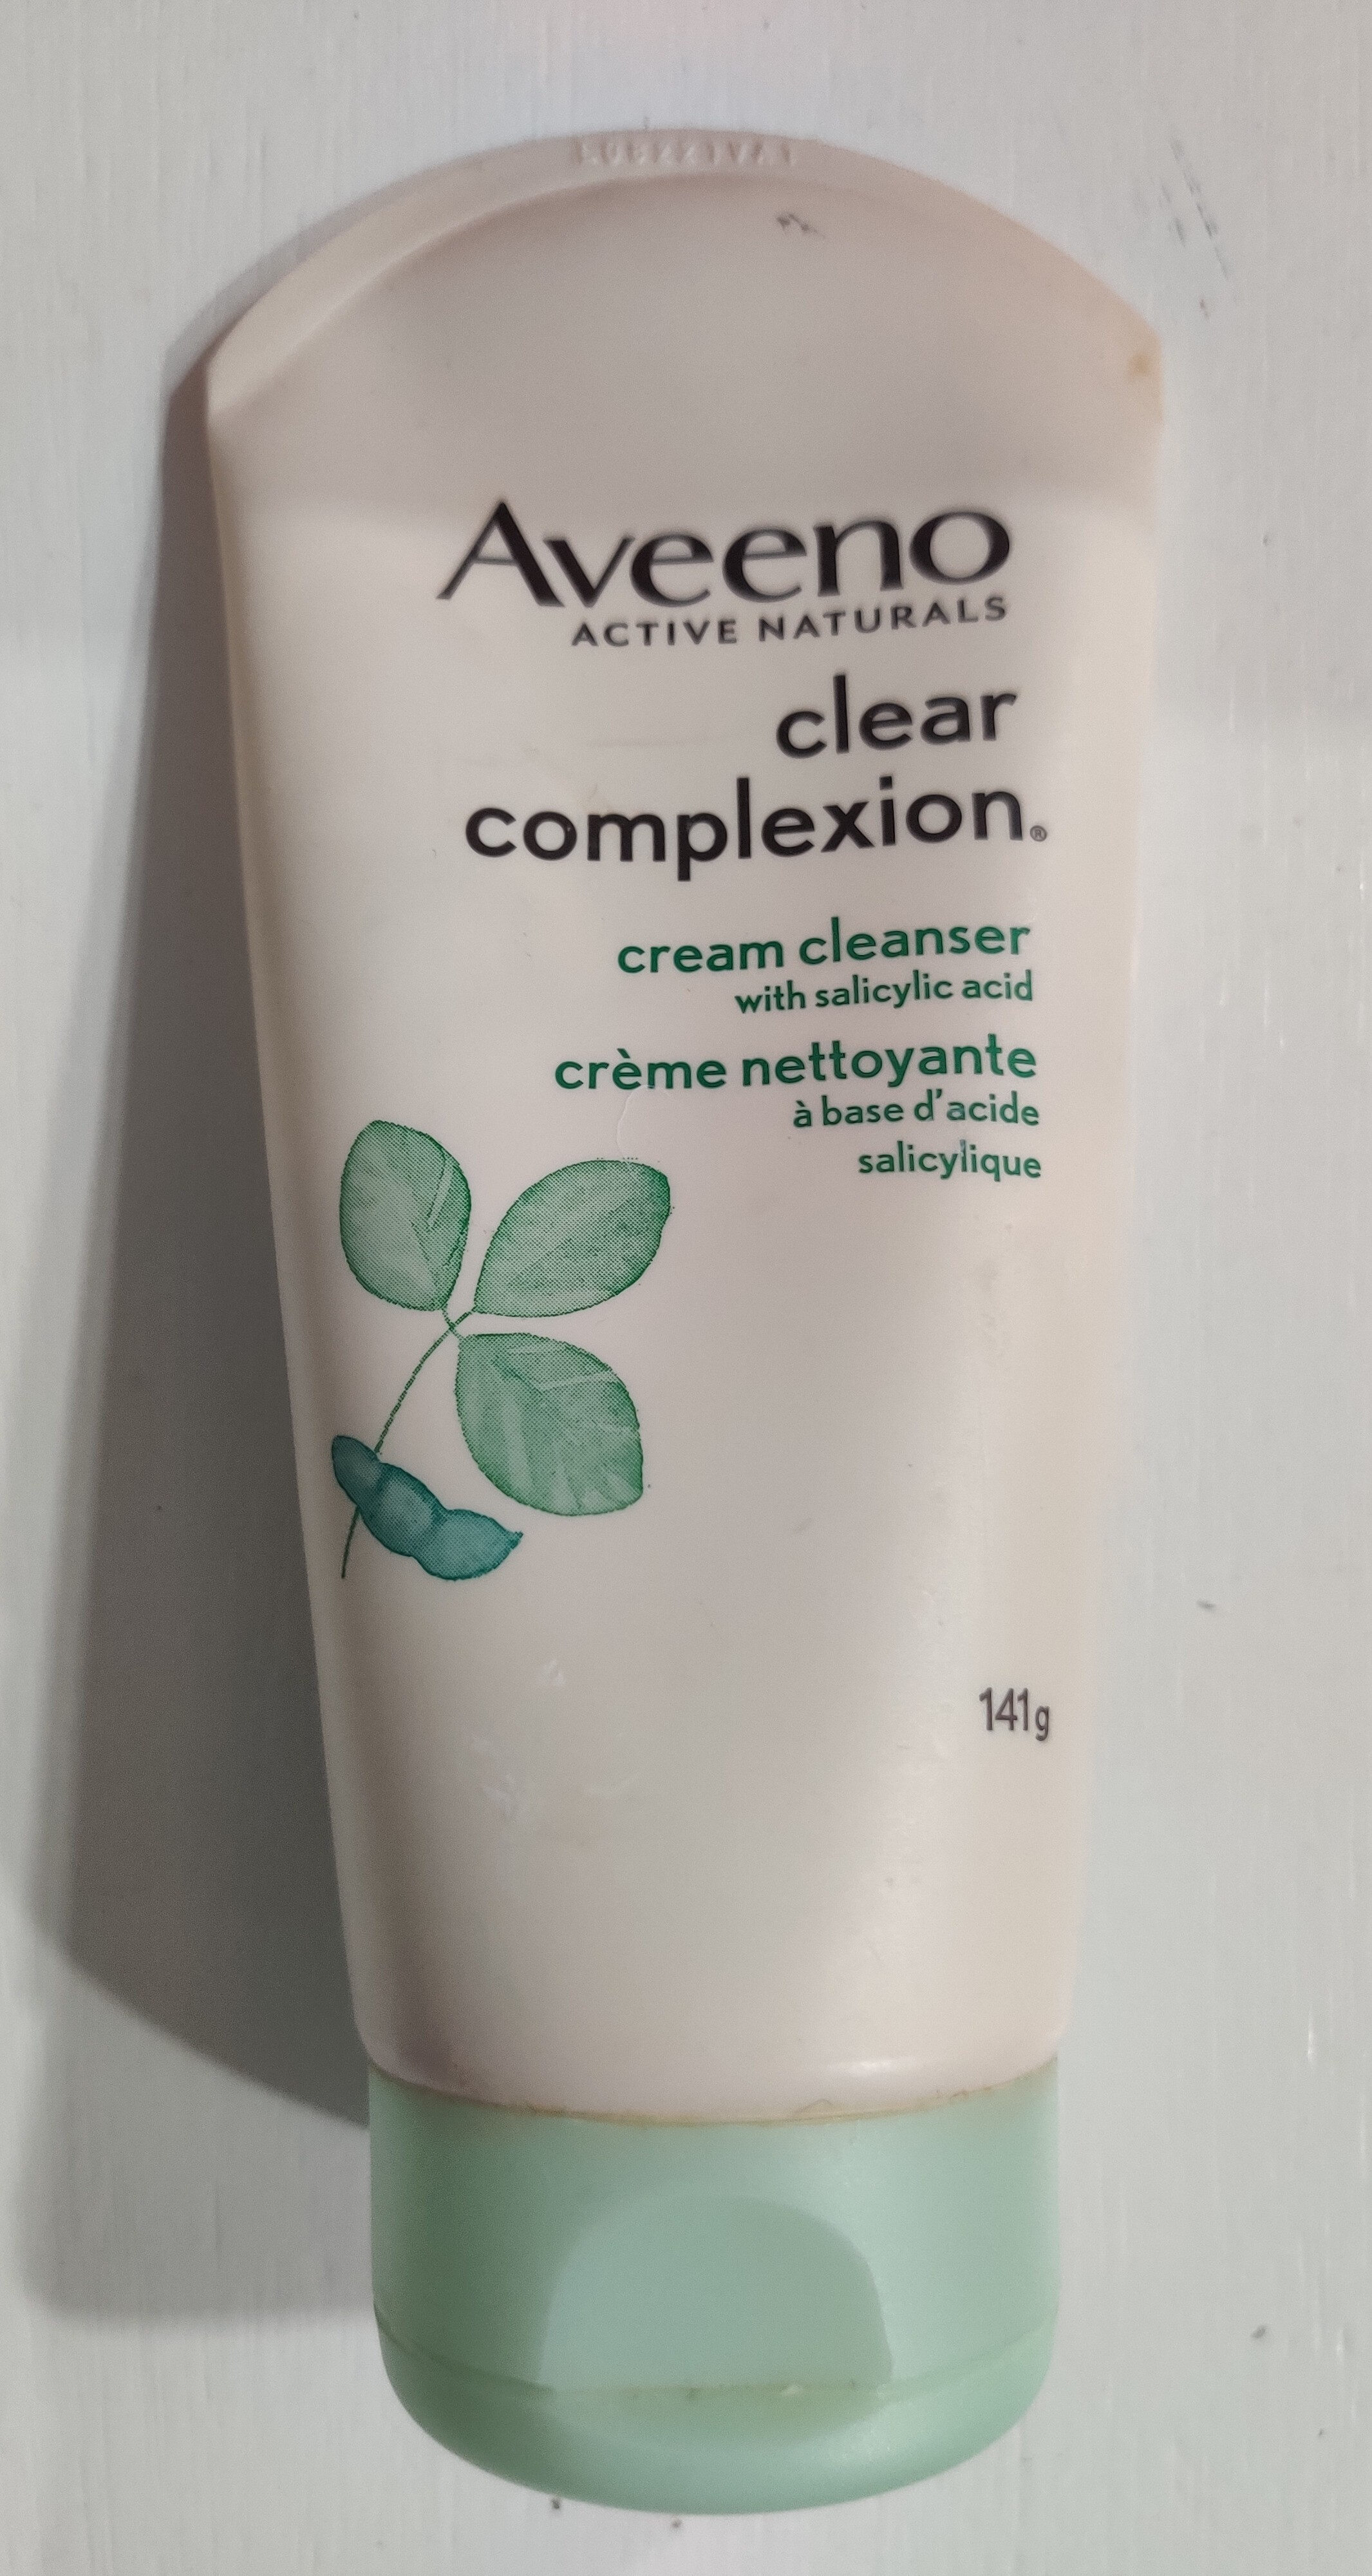 Aveeno clear completion cream cleanser - Produit - en